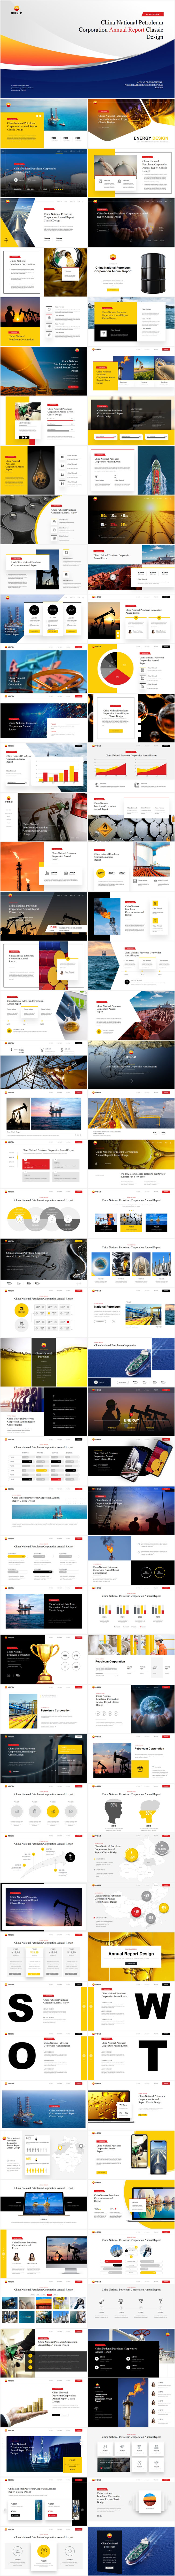 中国石油keynote模板